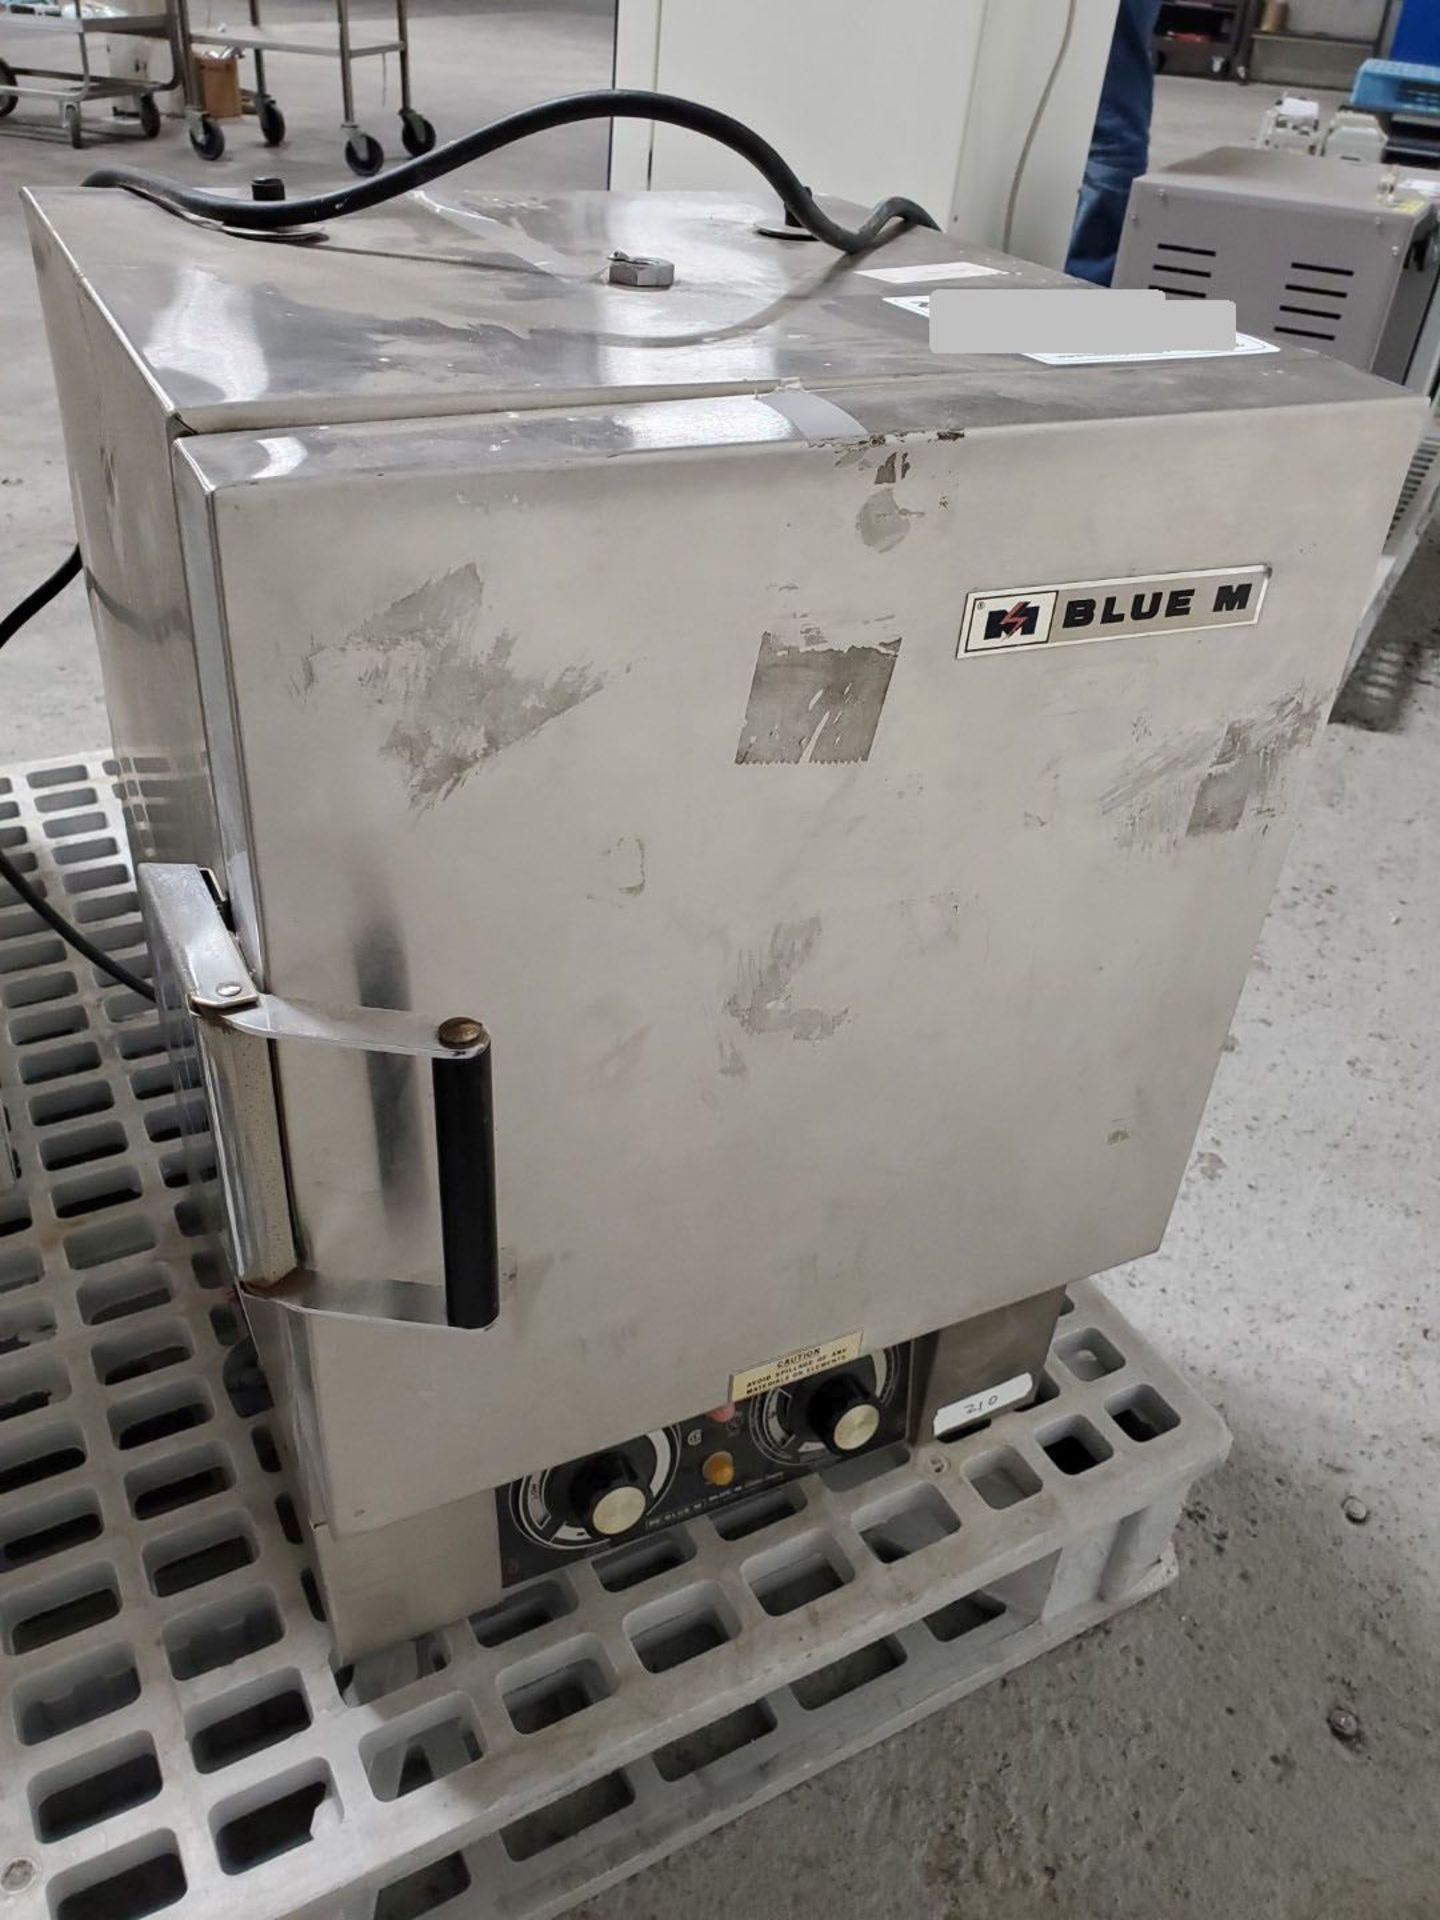 Blue M Oven, Model 0V-12A